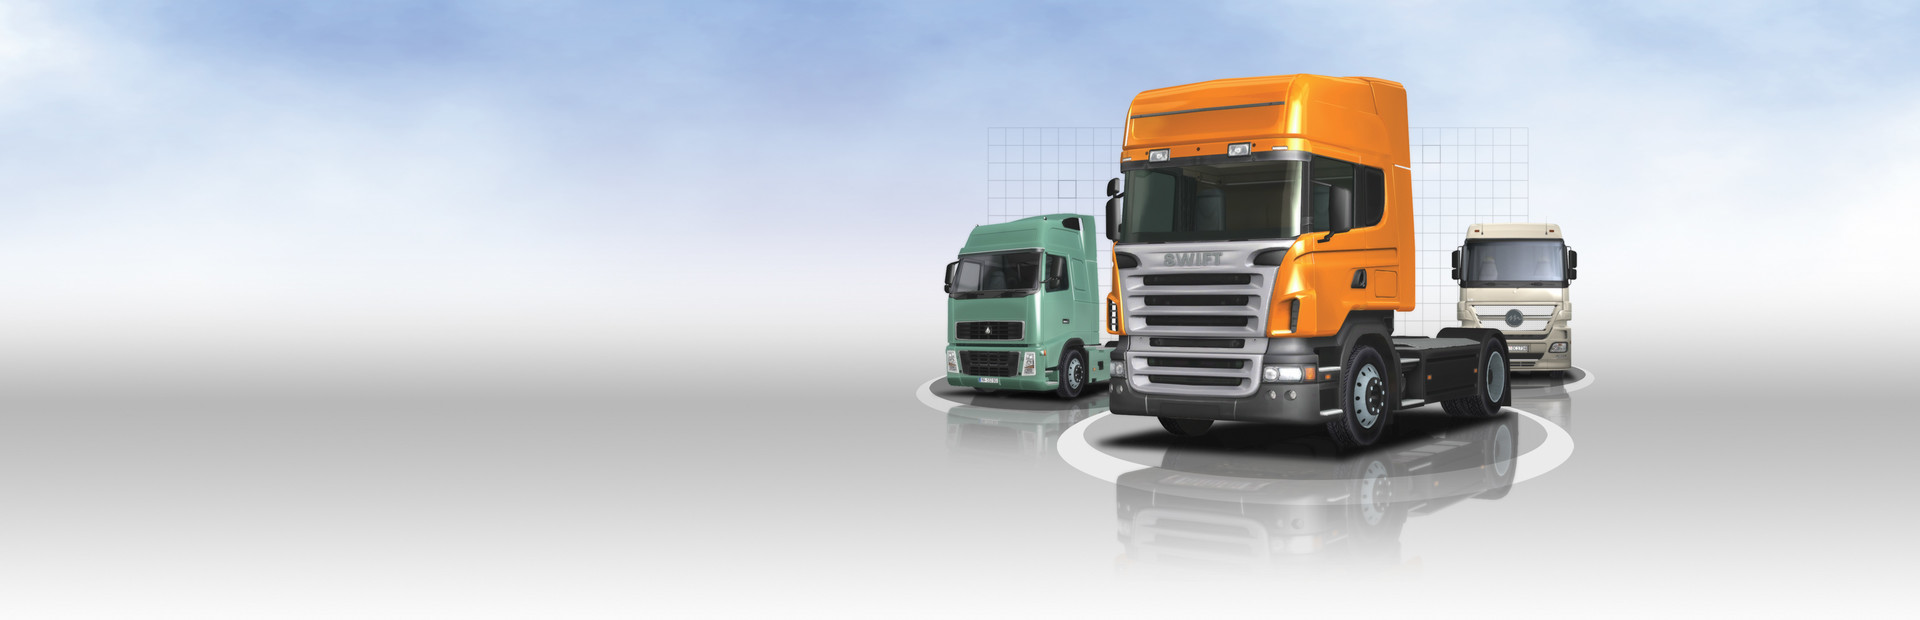 Euro Truck Simulator cover image